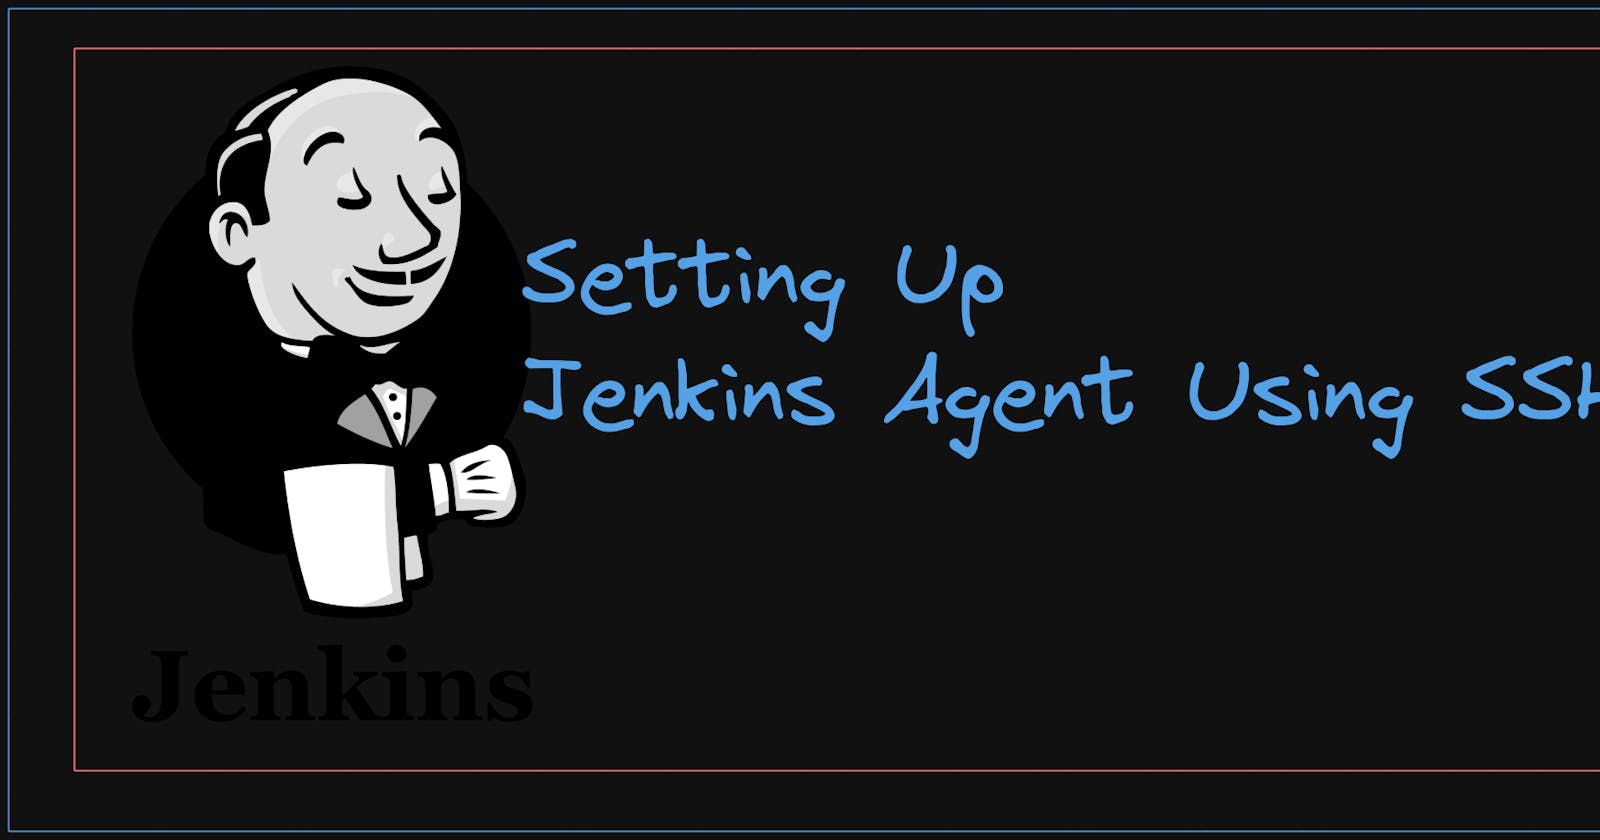 Setting Up Jenkins Agent Using SSH